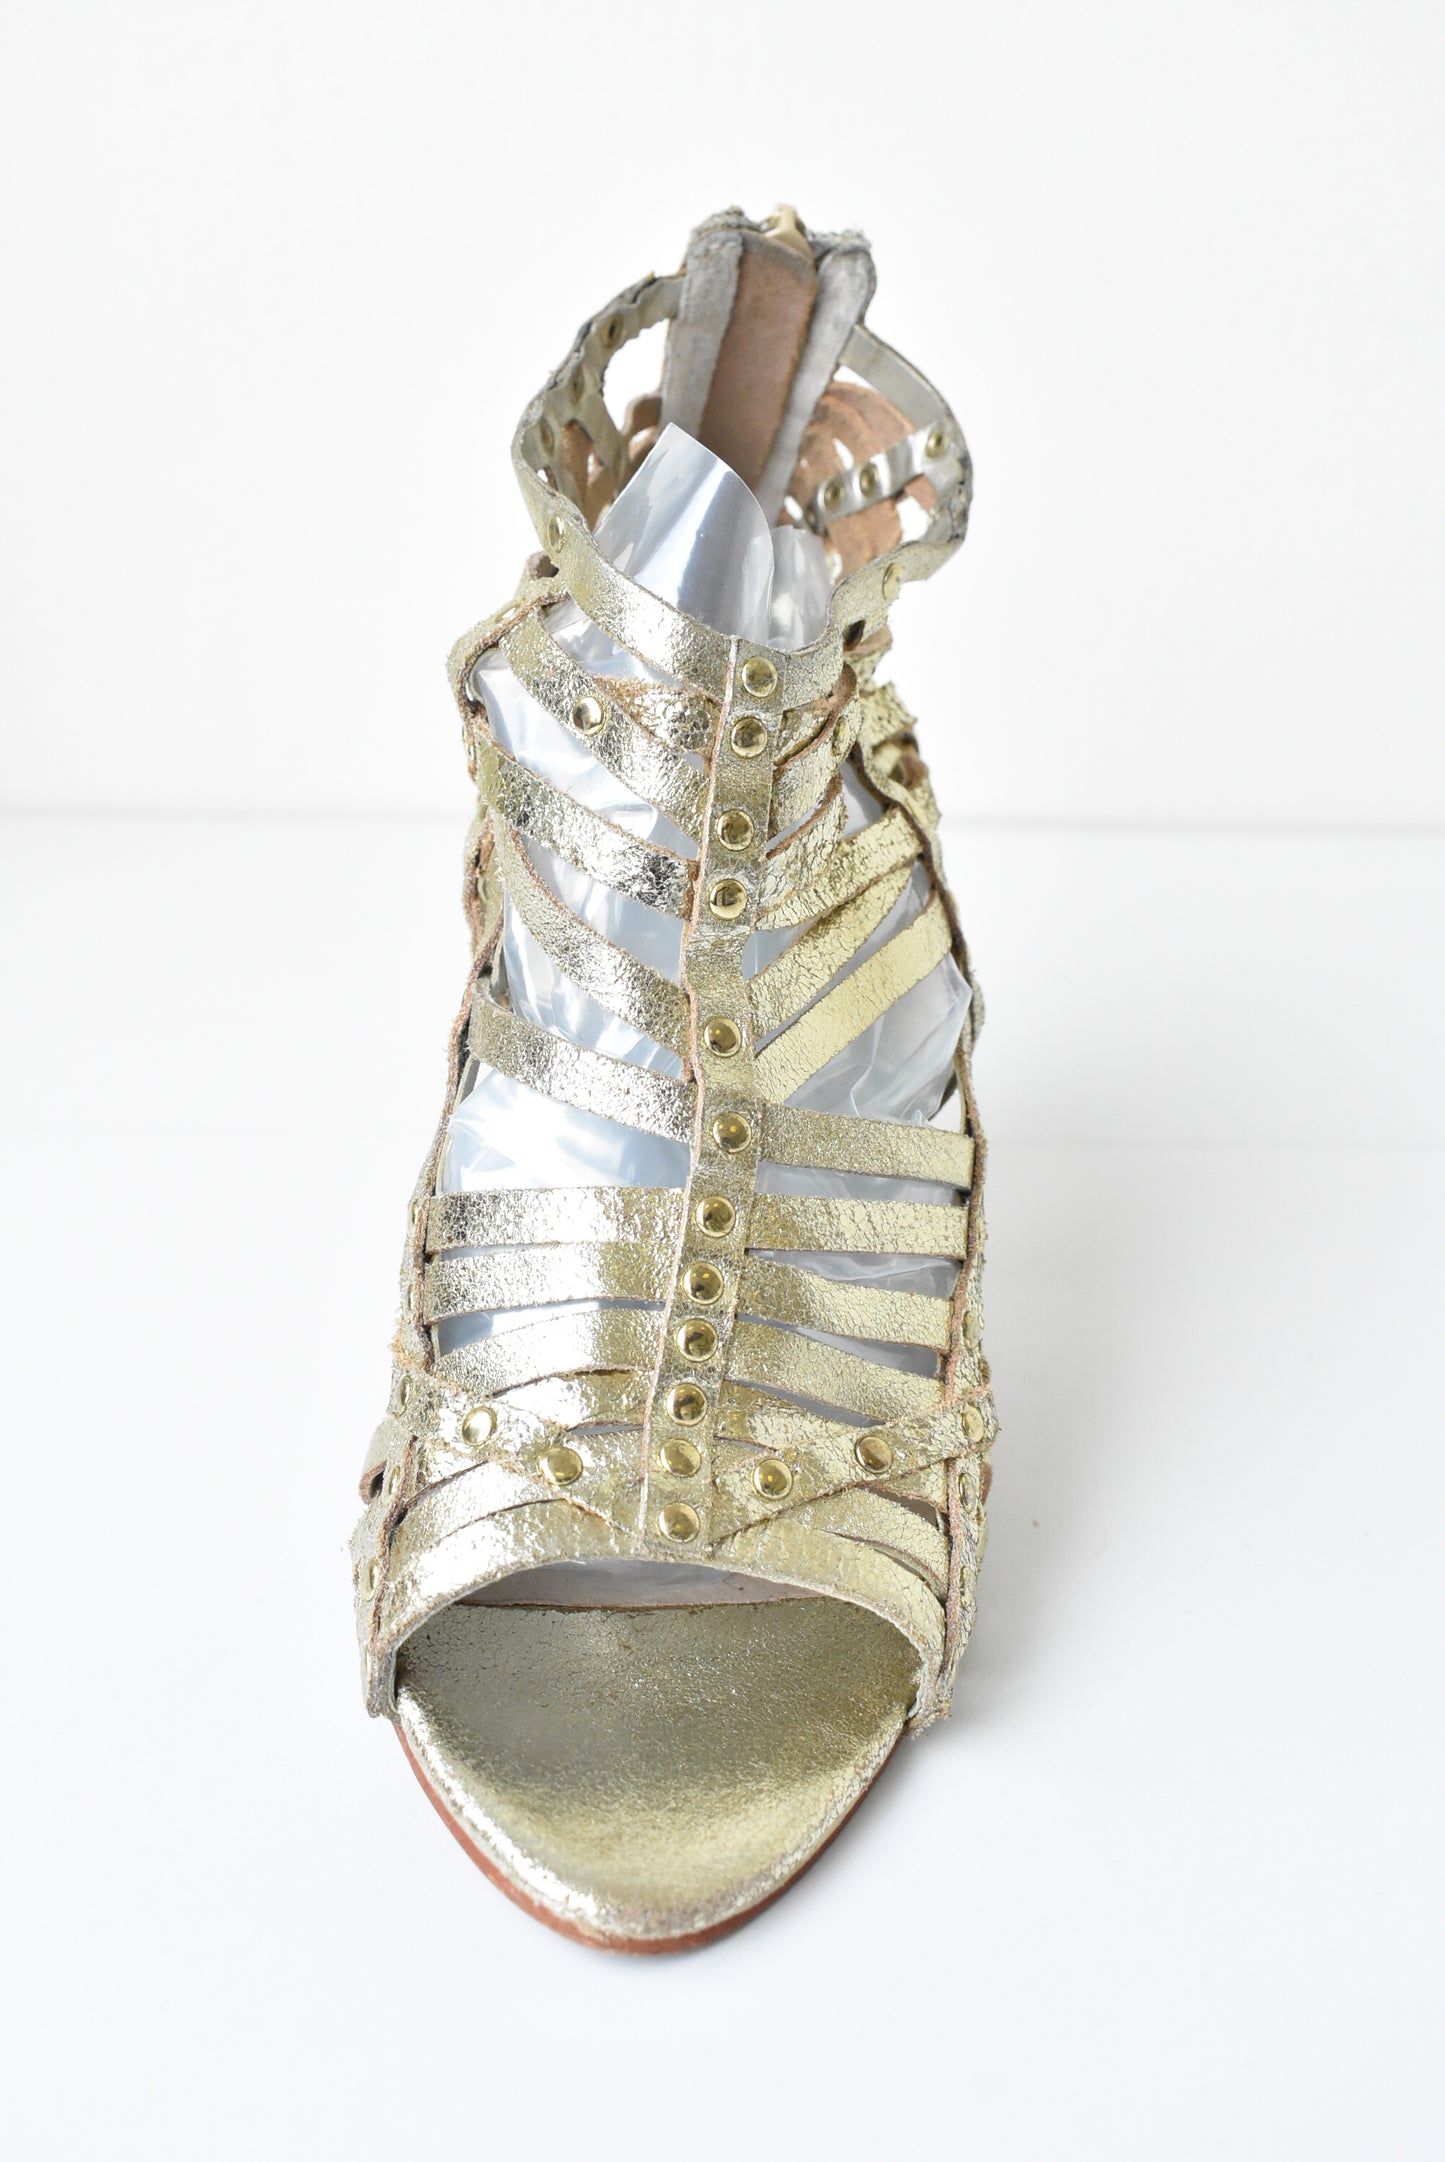 Aldo golden heeled sandals, size 38